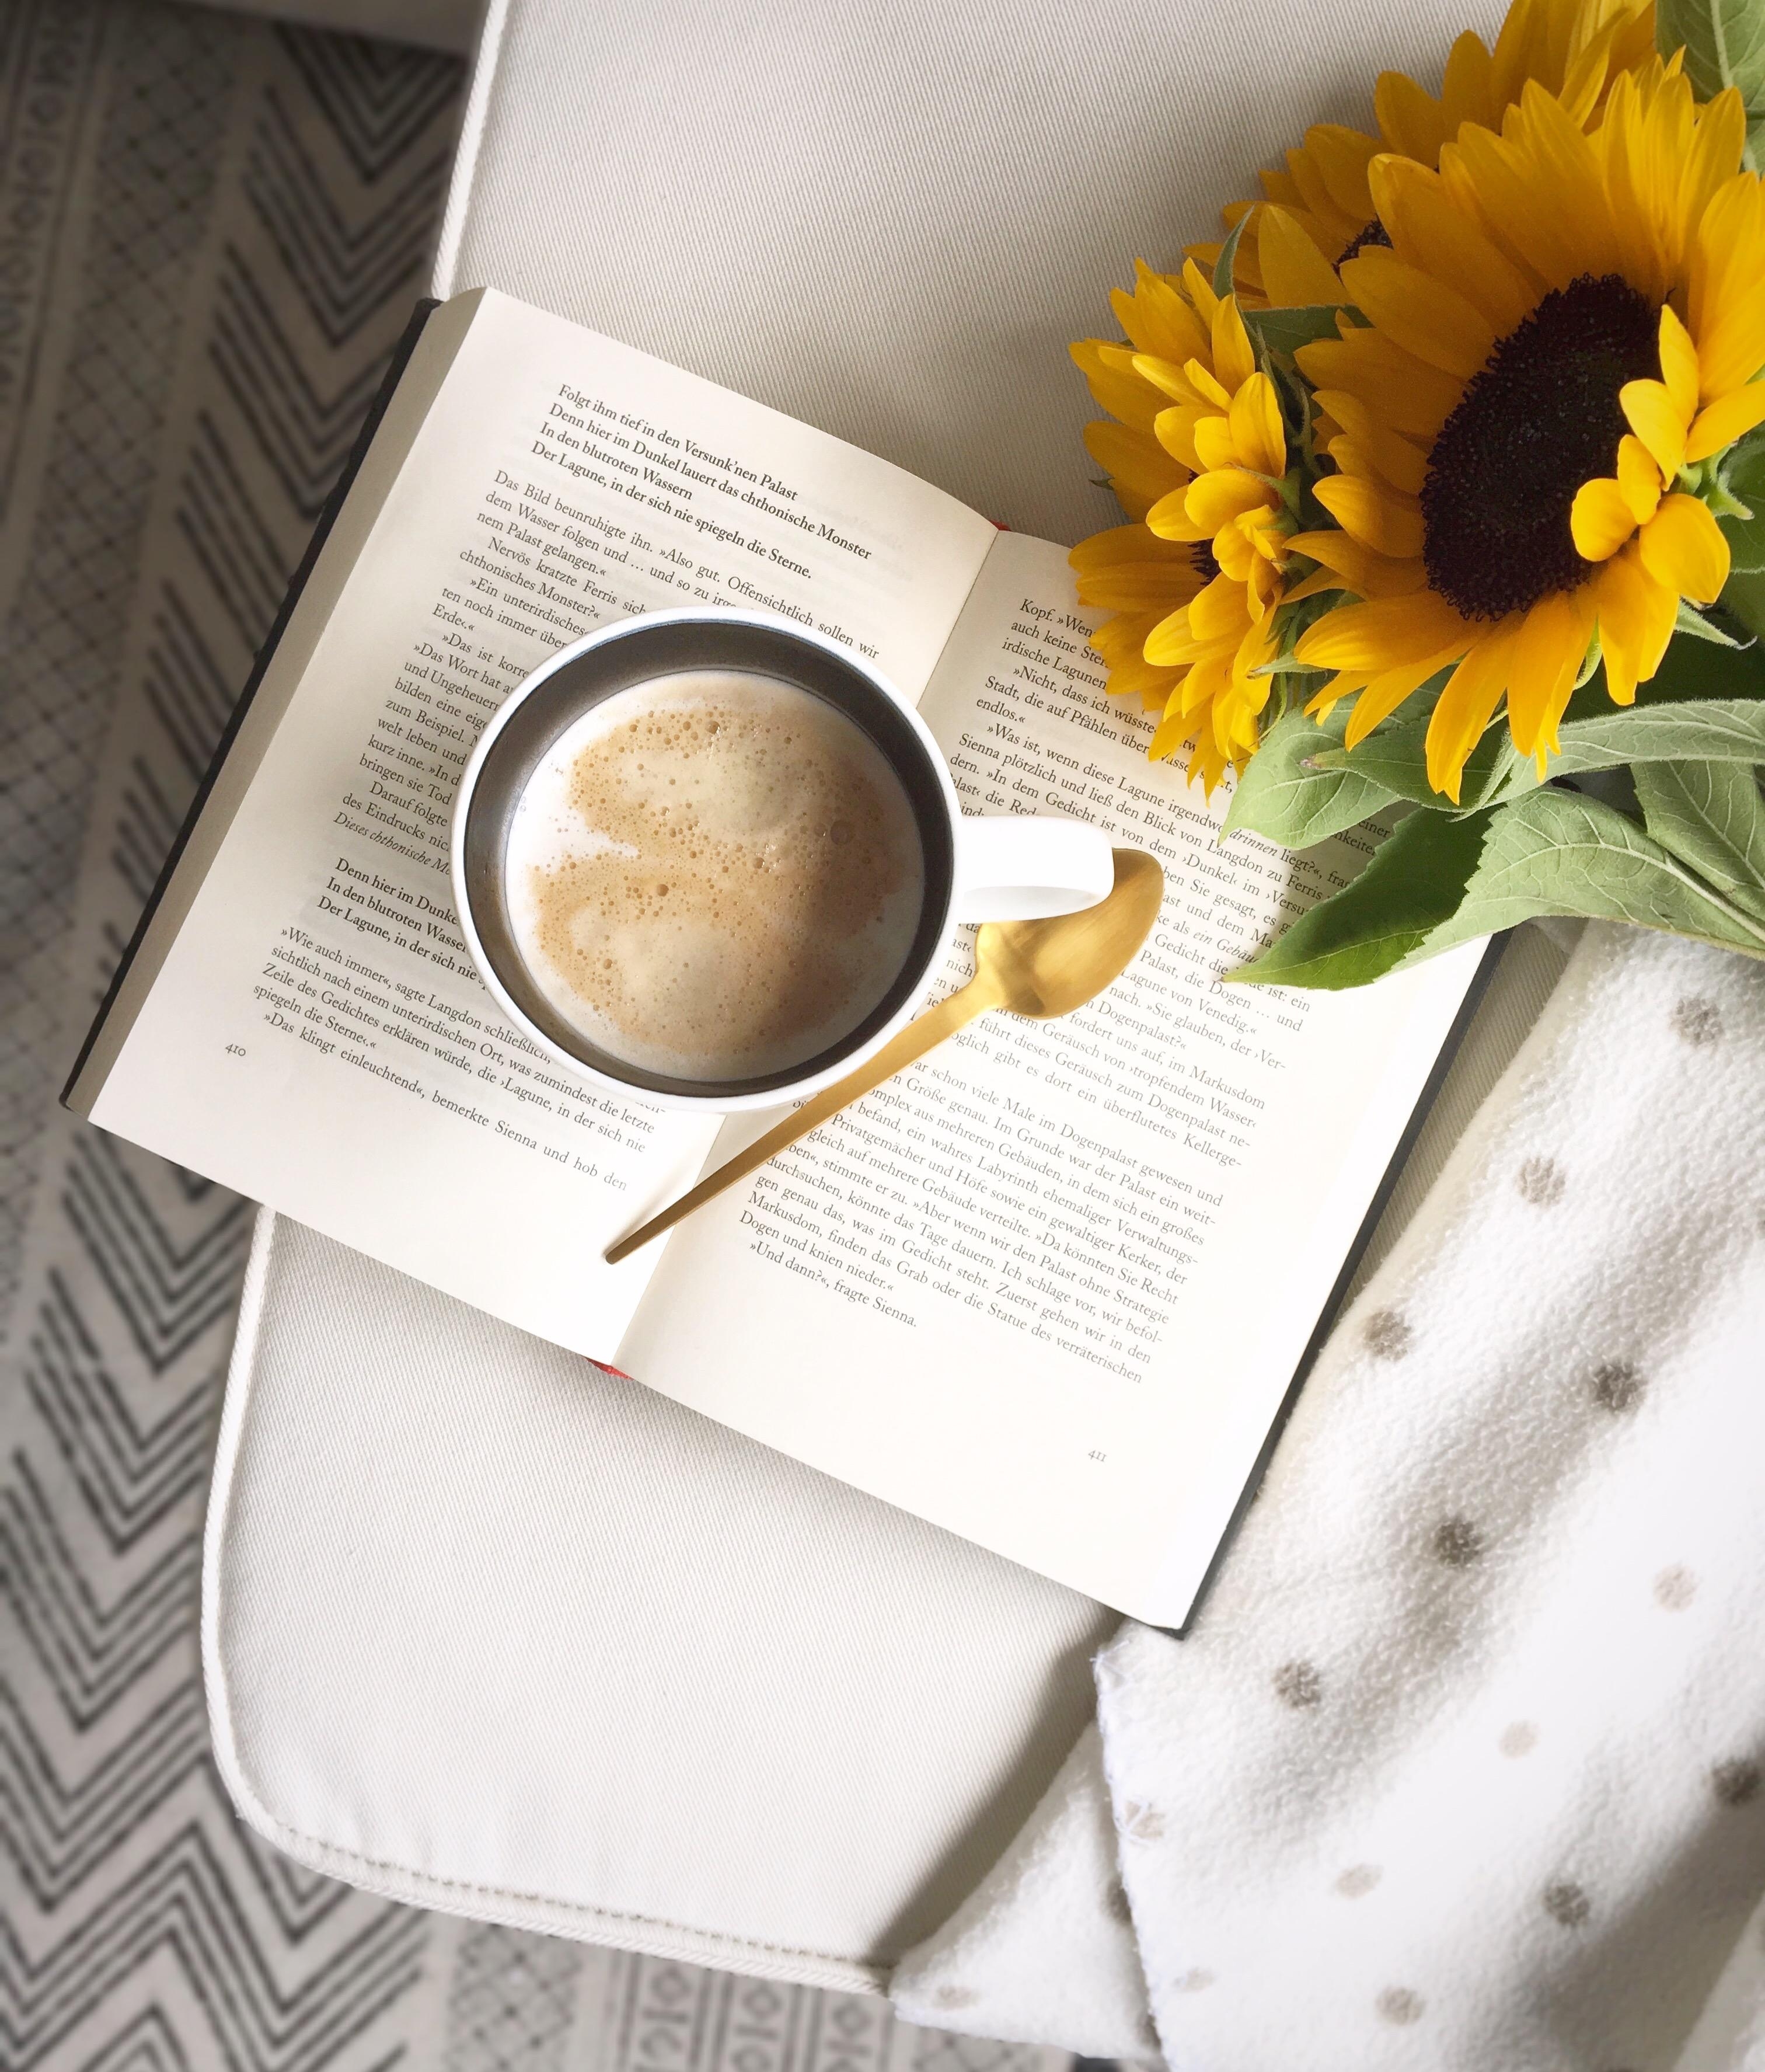 Perfektes Lesewetter heute 🌧🌻 #sonnenblumen #kaffee #coffeetime  #stillleben